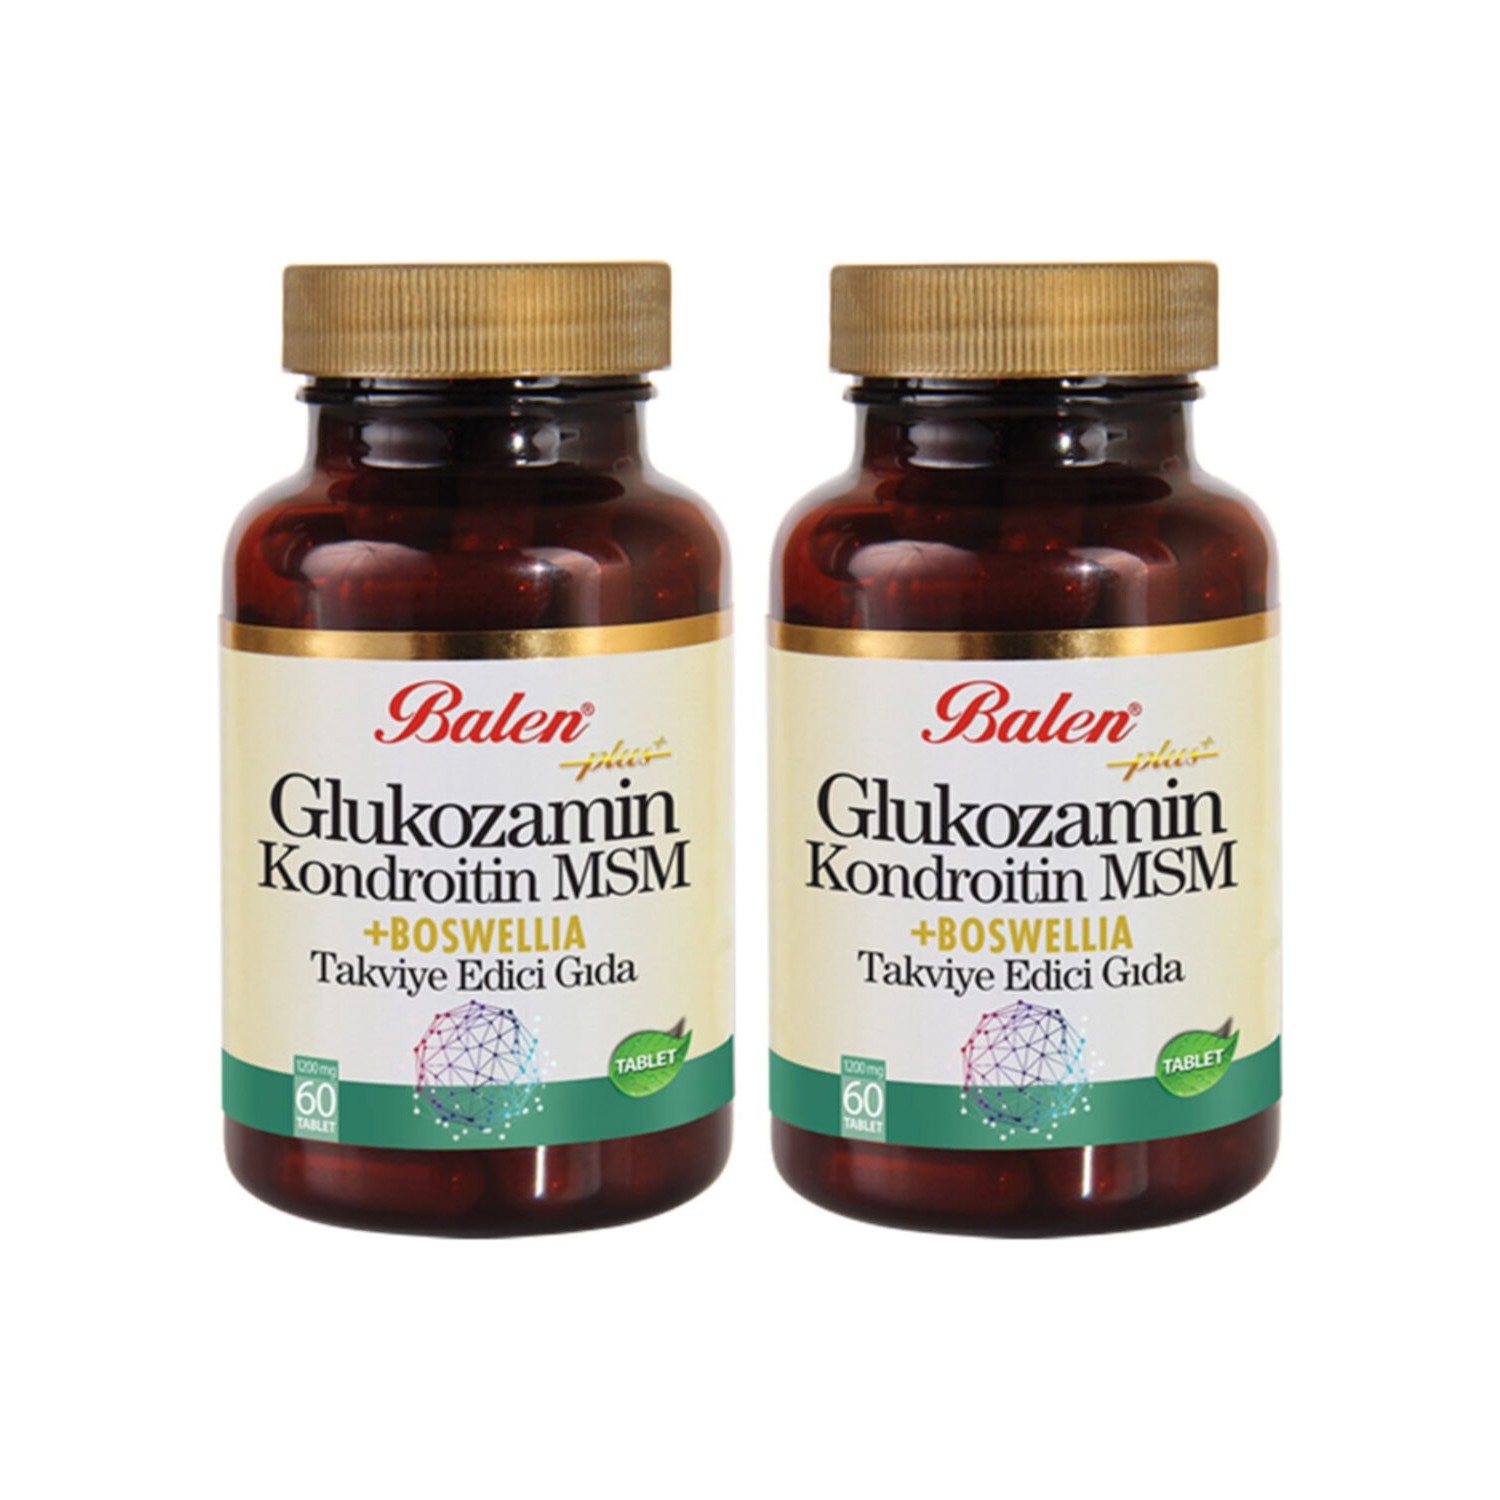 Активная добавка глюкозамин Balen Chondroitin Msm Boswelia Tablet, 60 капсул, 1200 мг, 2 штуки биологически активная добавка mychoice nutrition glucosamine chondroitin msm 60 шт